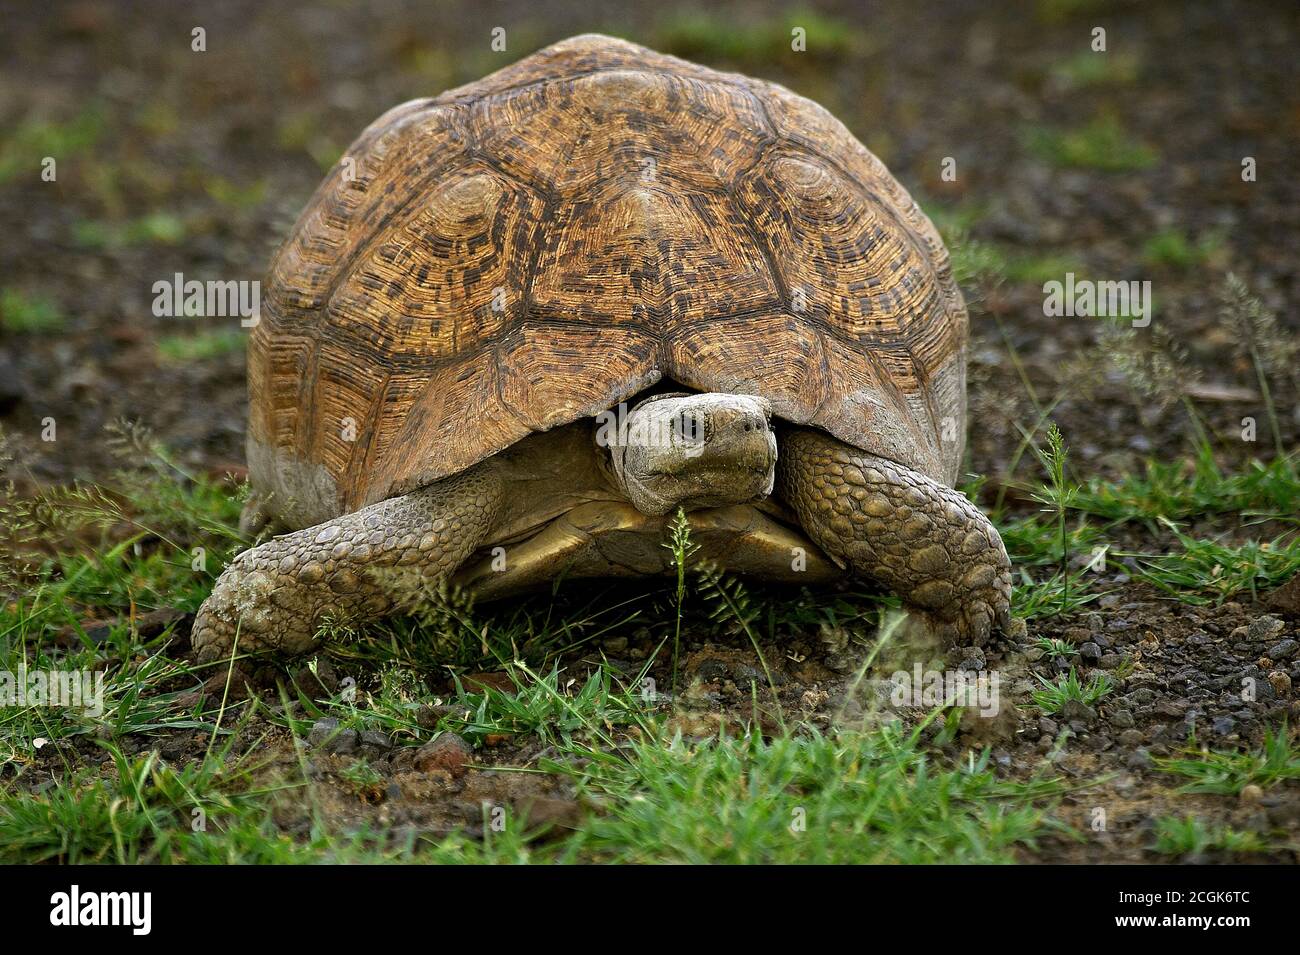 Leopard Tortoise, geochelone pardalis, Adult standing on Grass, Kenya Stock Photo